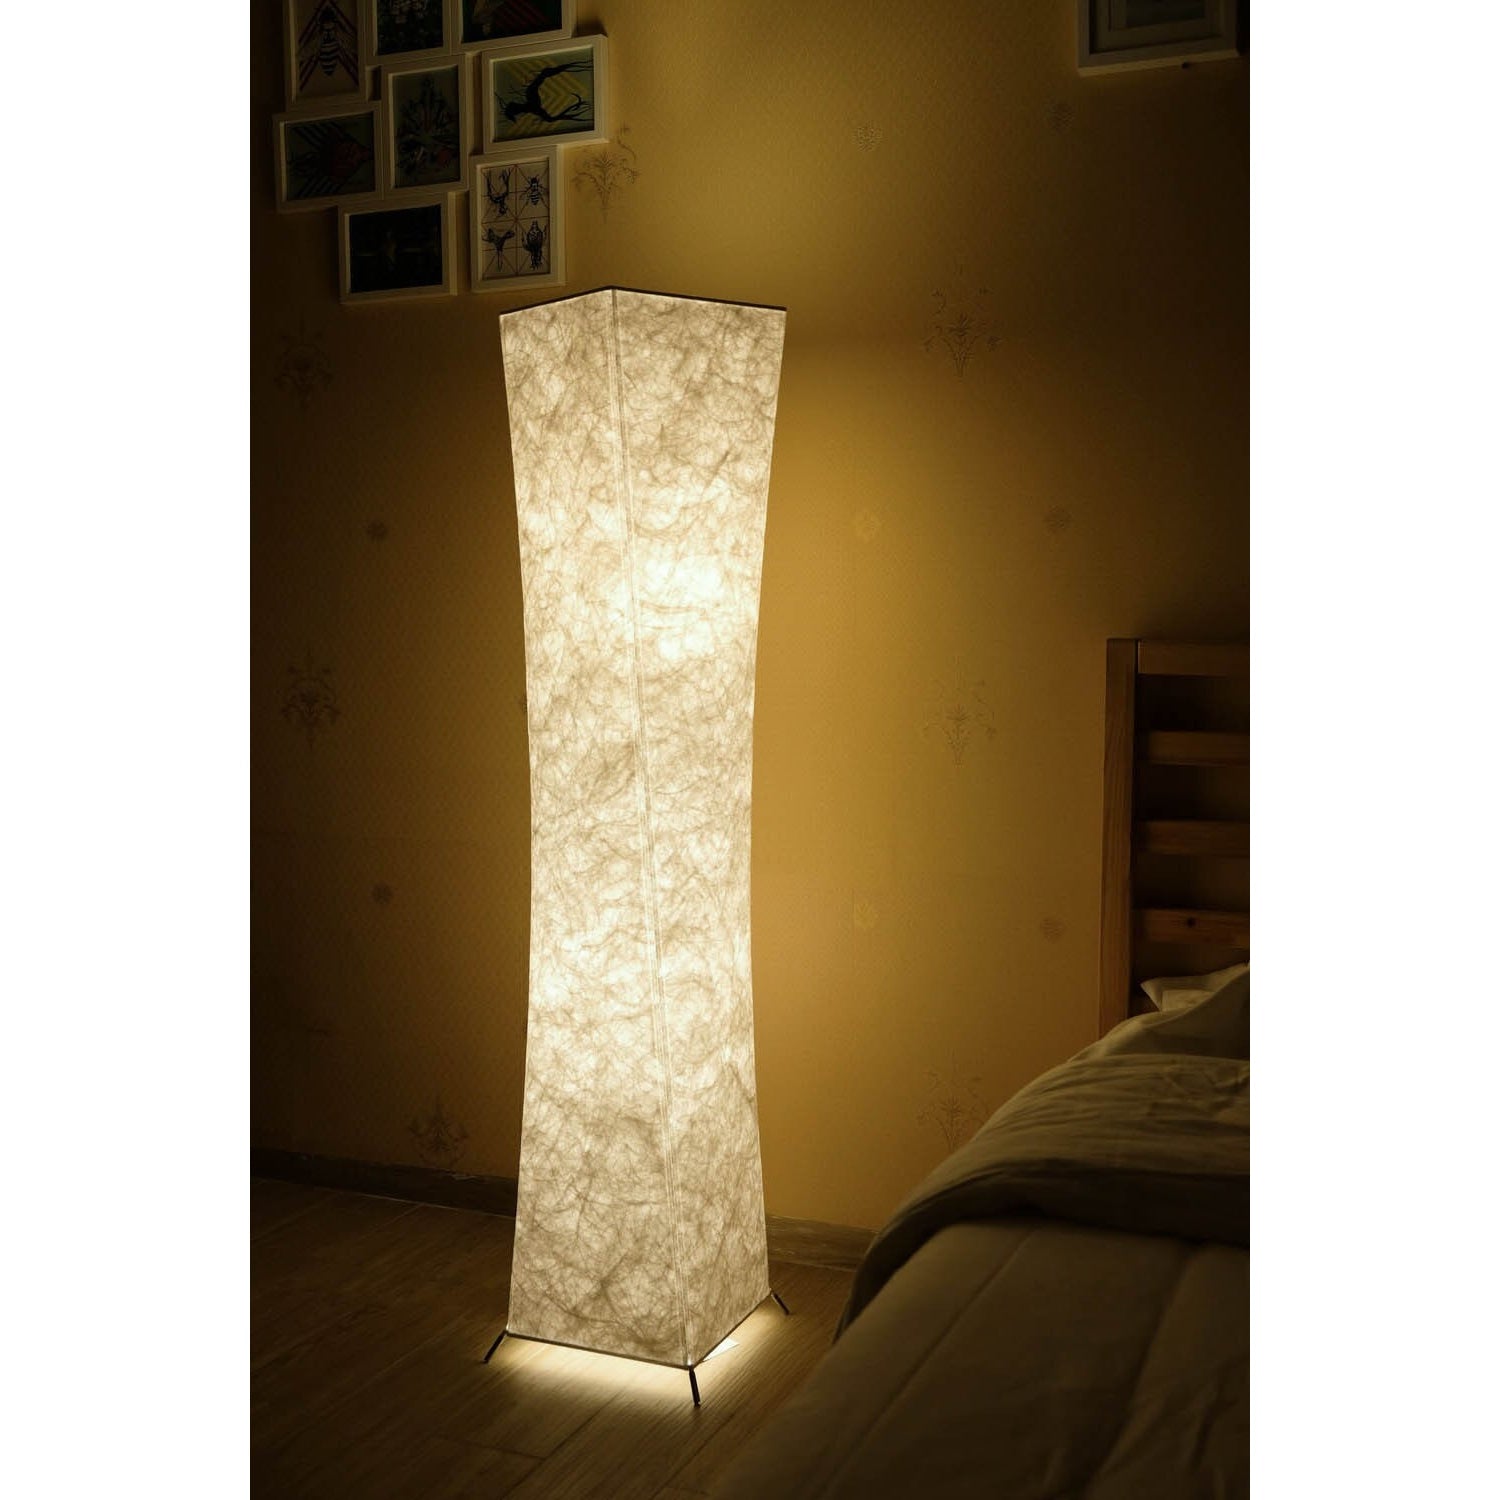 Noguchi Lamp | Rice Paper Floor | White Eco-friendly For Living Room Bedroom - Minimalist Floor Lamps